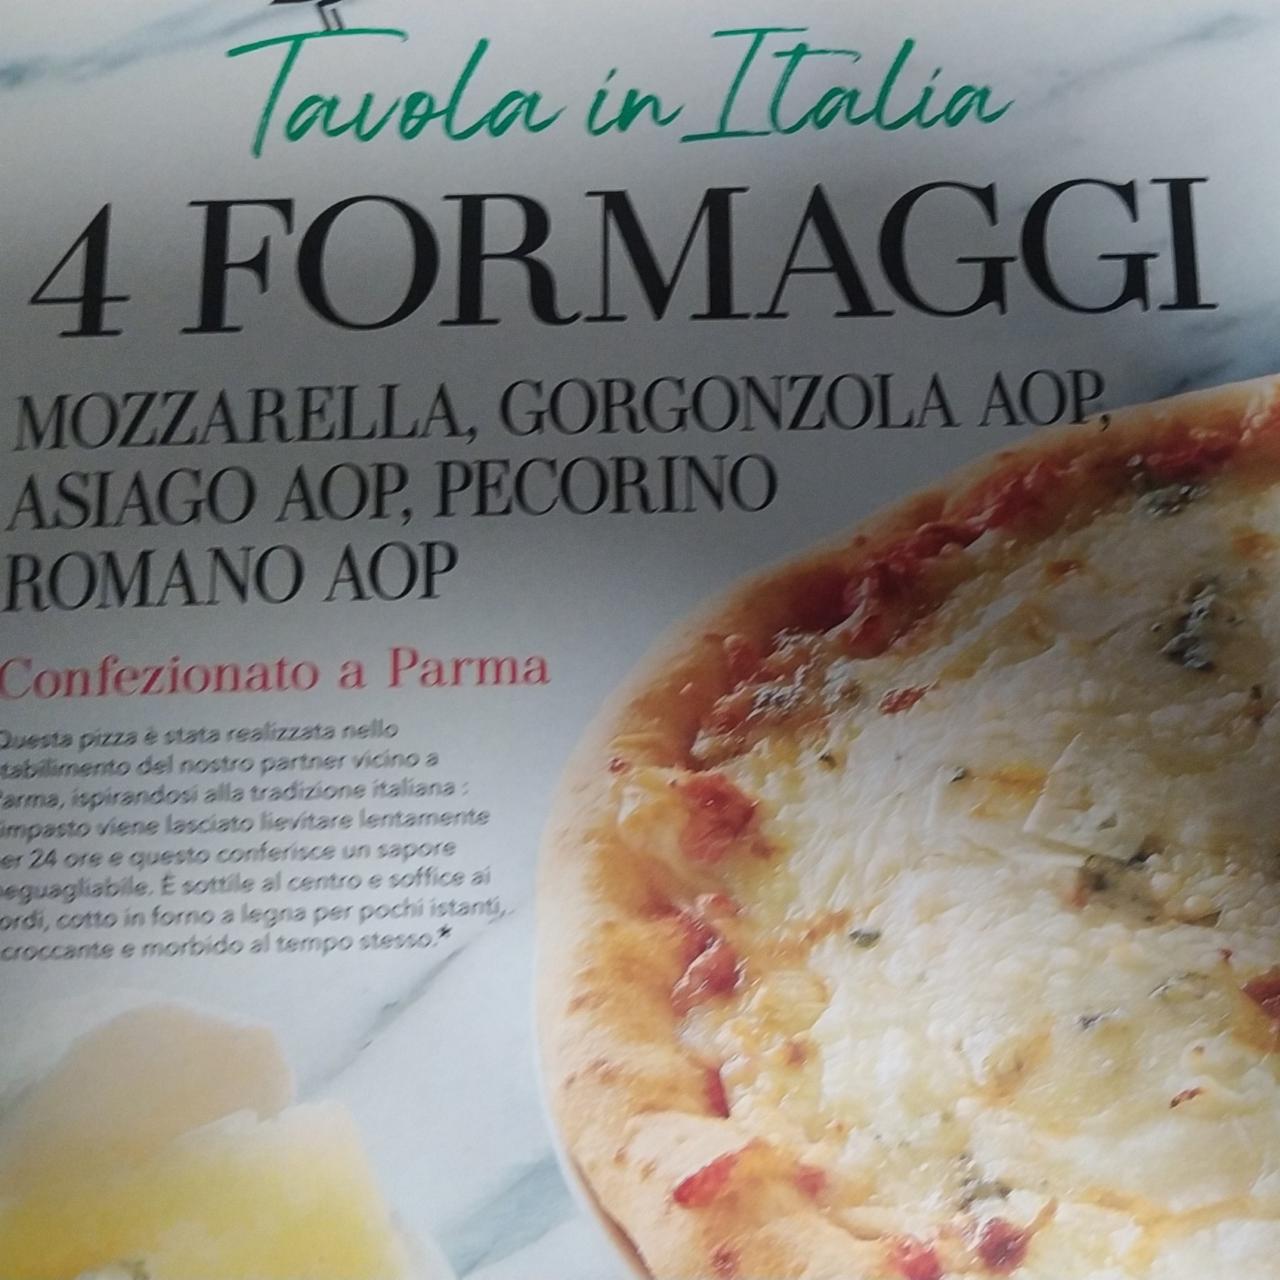 Zdjęcia - 4 formaggi Tavola in Italia pizza Auchan